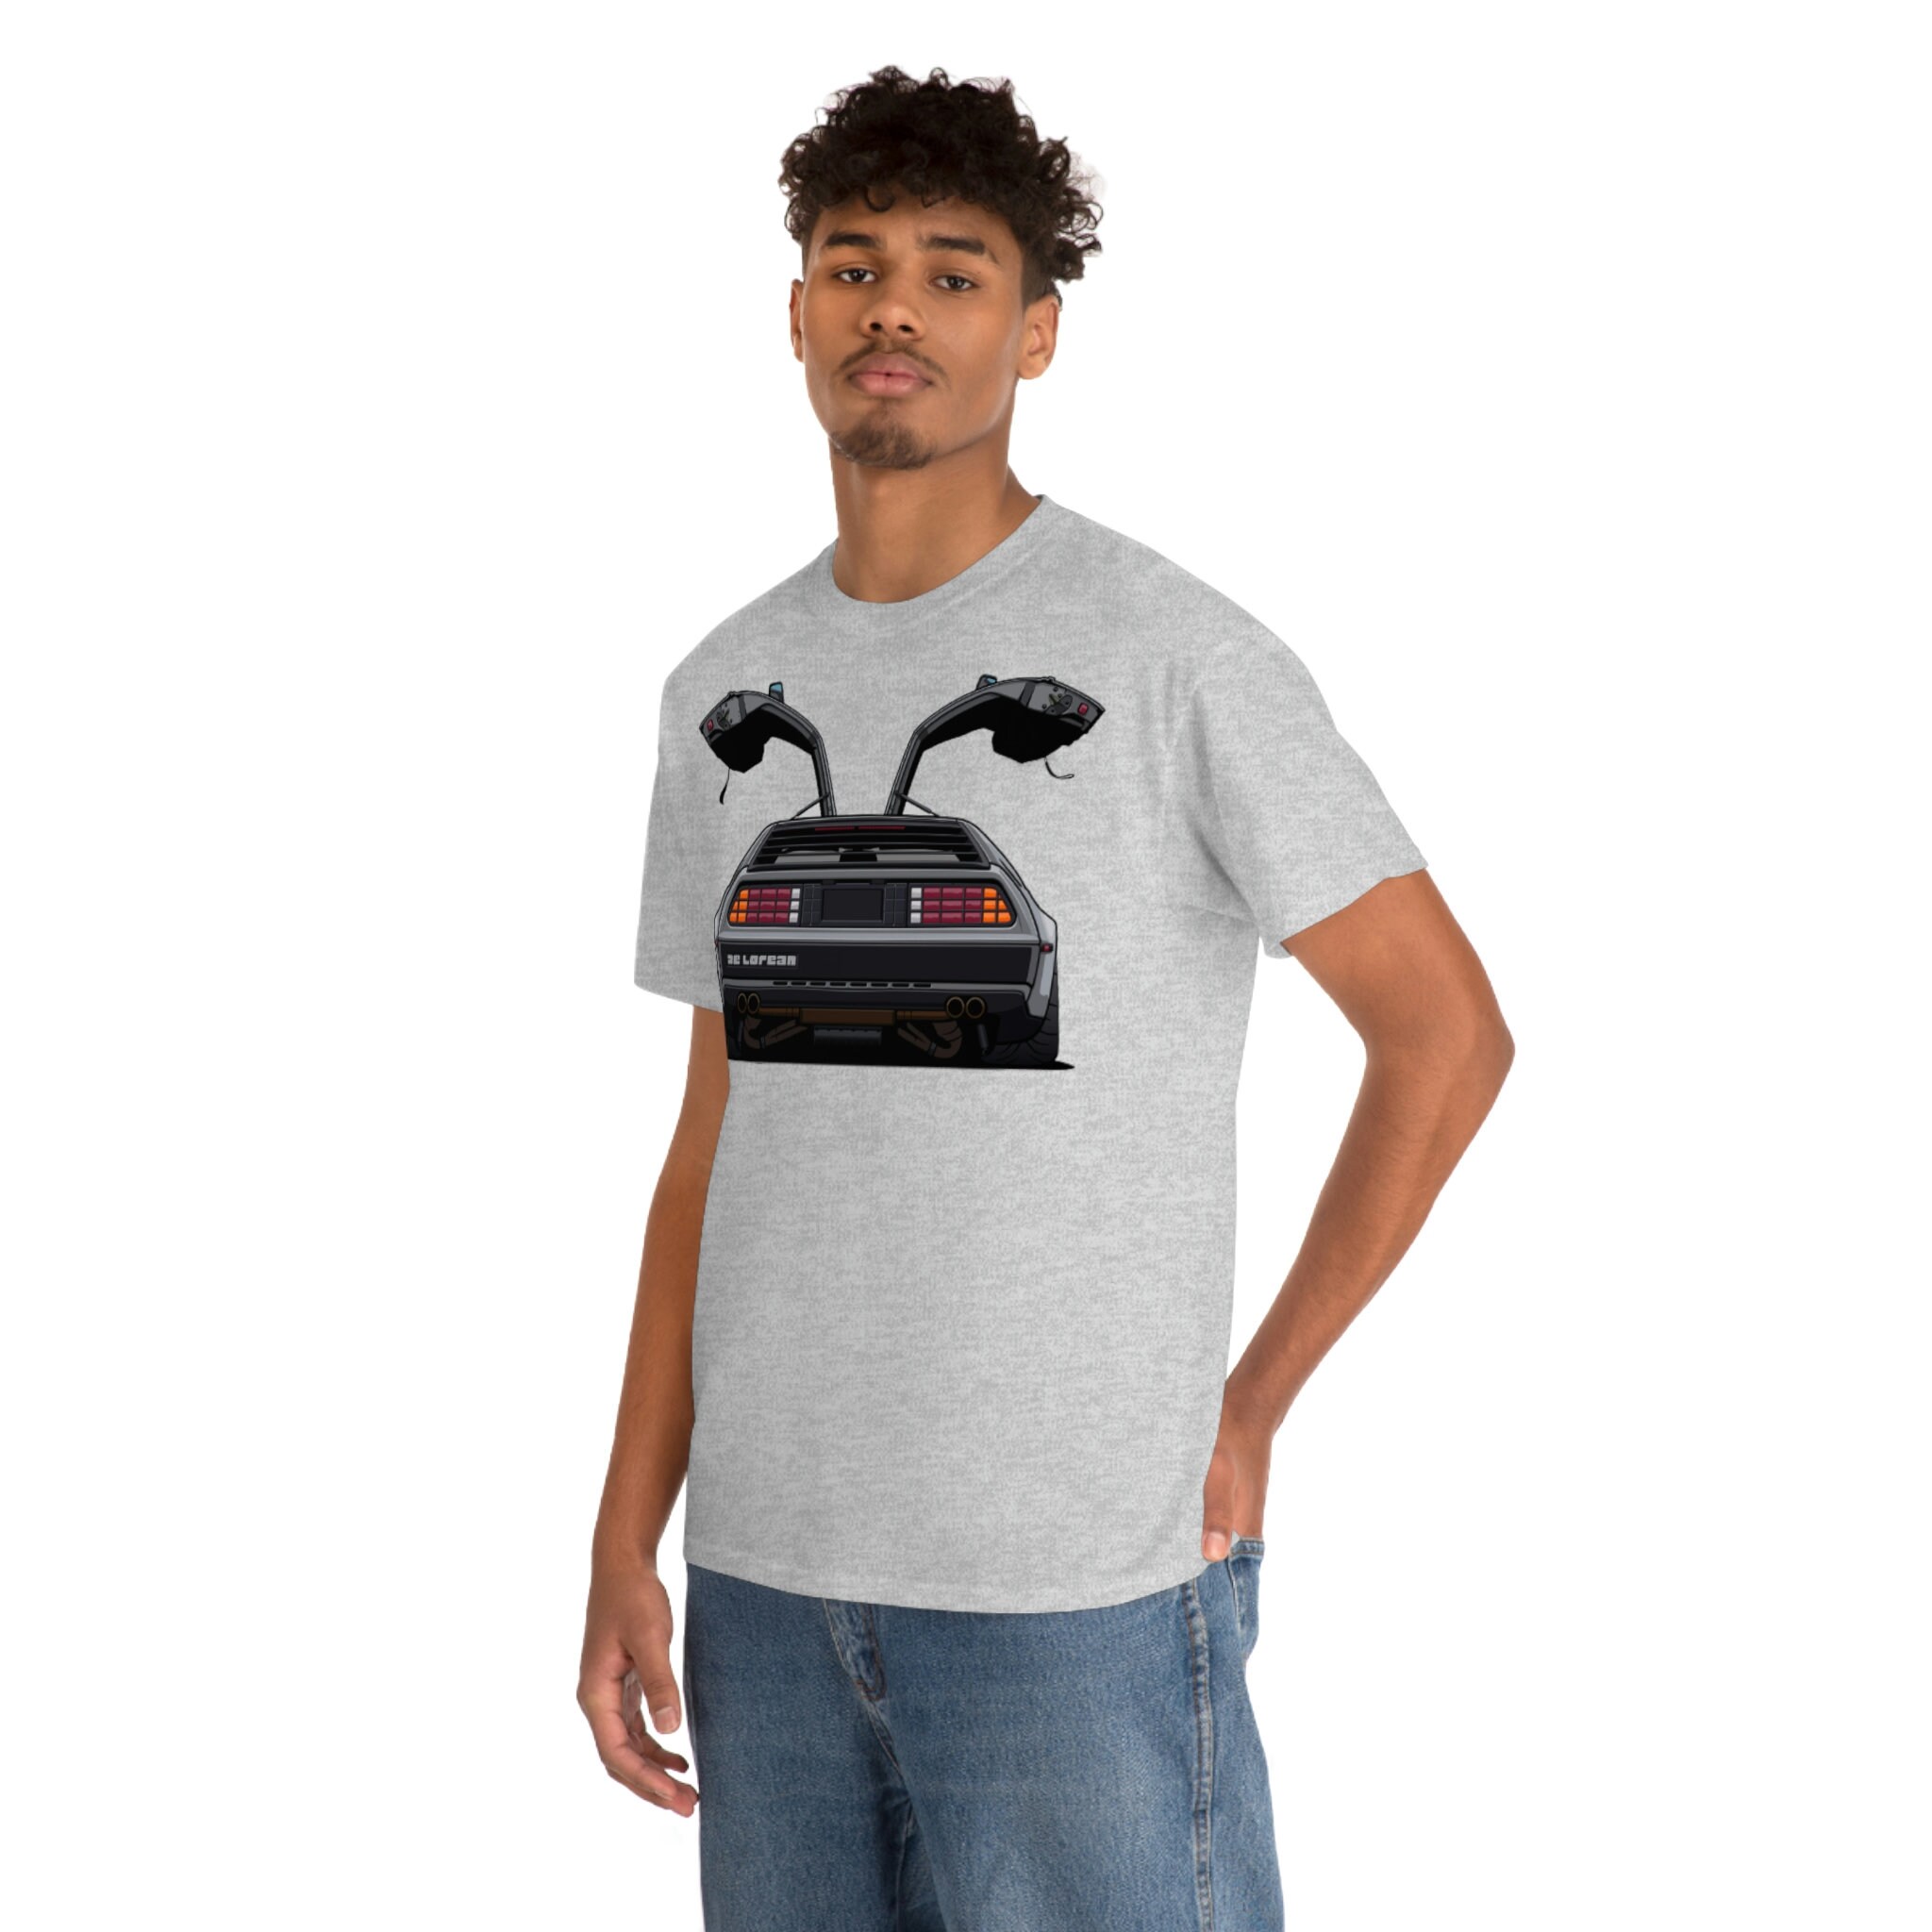 Back to The Future Soft Neon DeLorean Car Men's T Shirt 80s Movie Merch  McFly